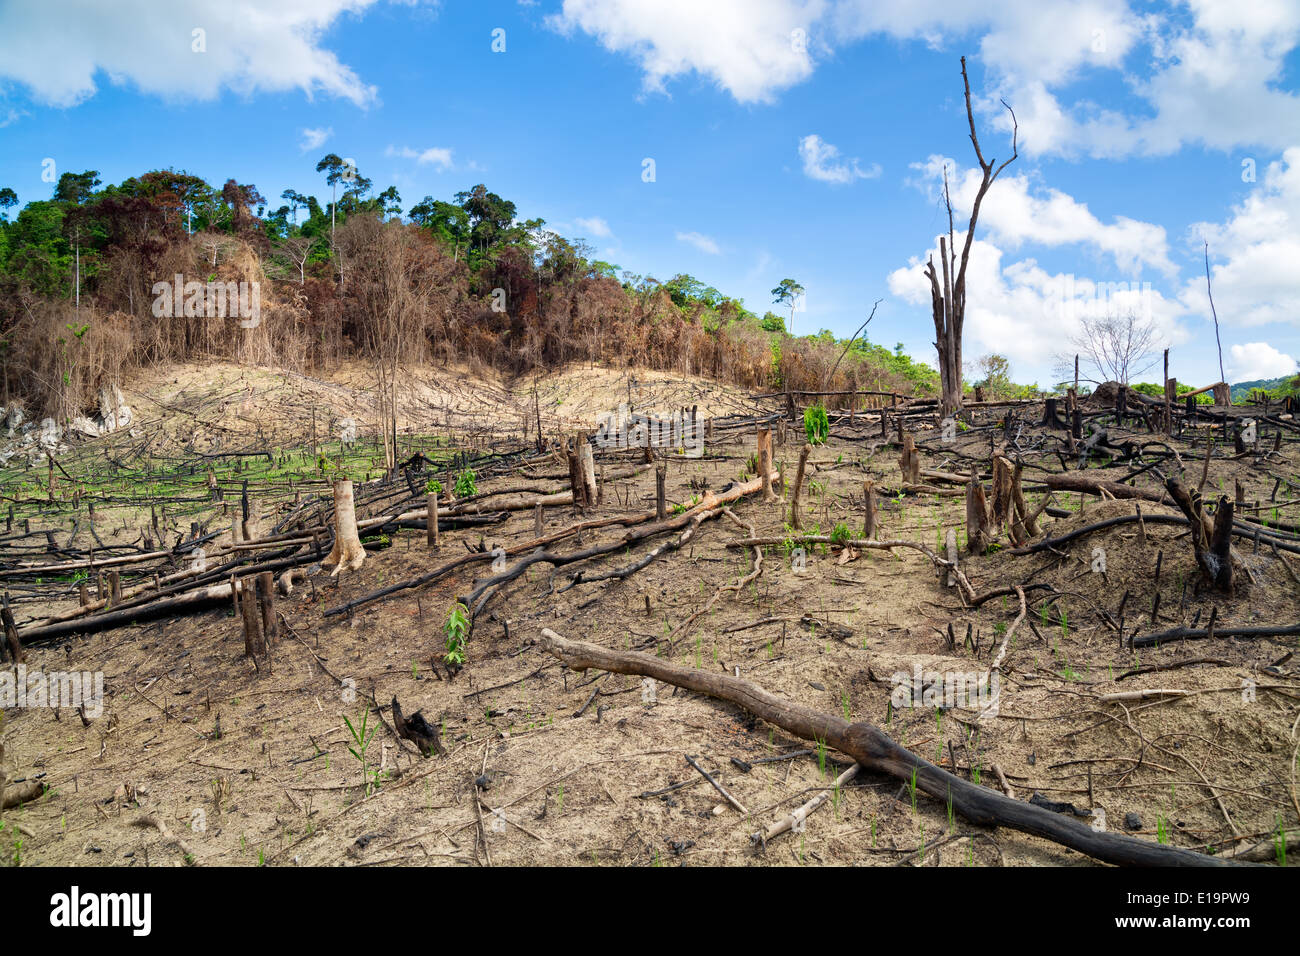 Deforestation in El Nido, Palawan - Philippines Stock Photo